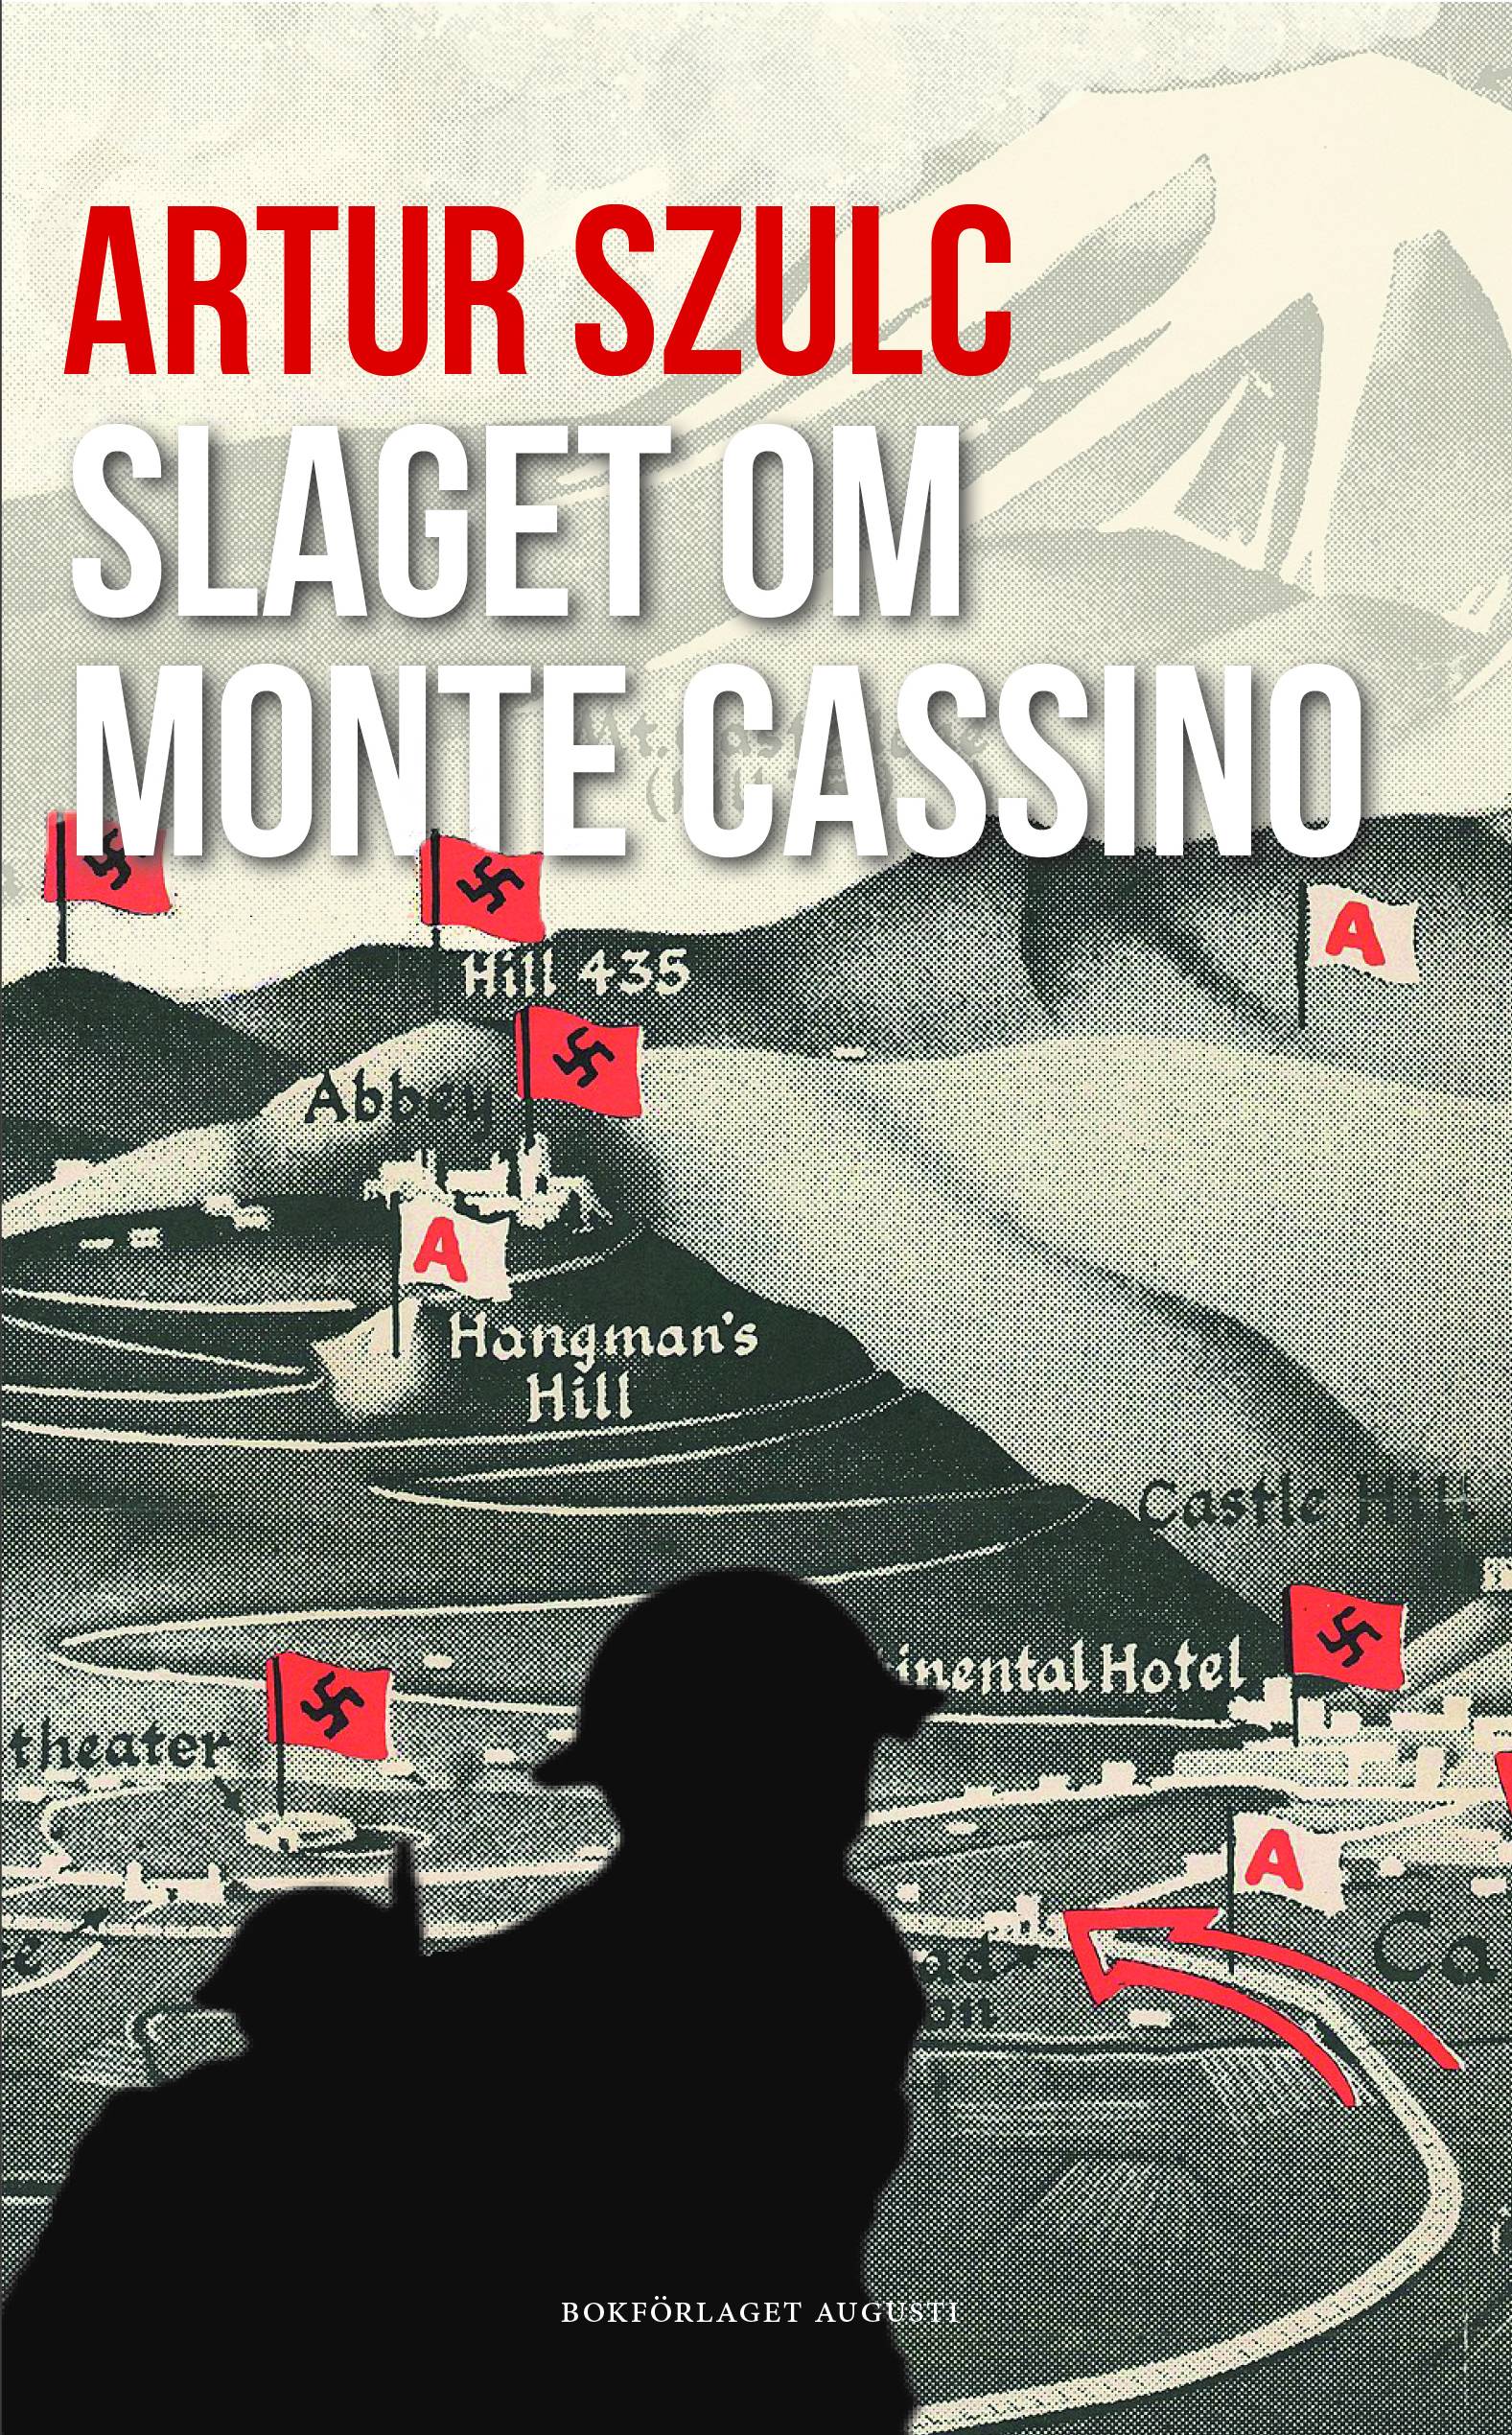 Slaget vid Monte Cassino